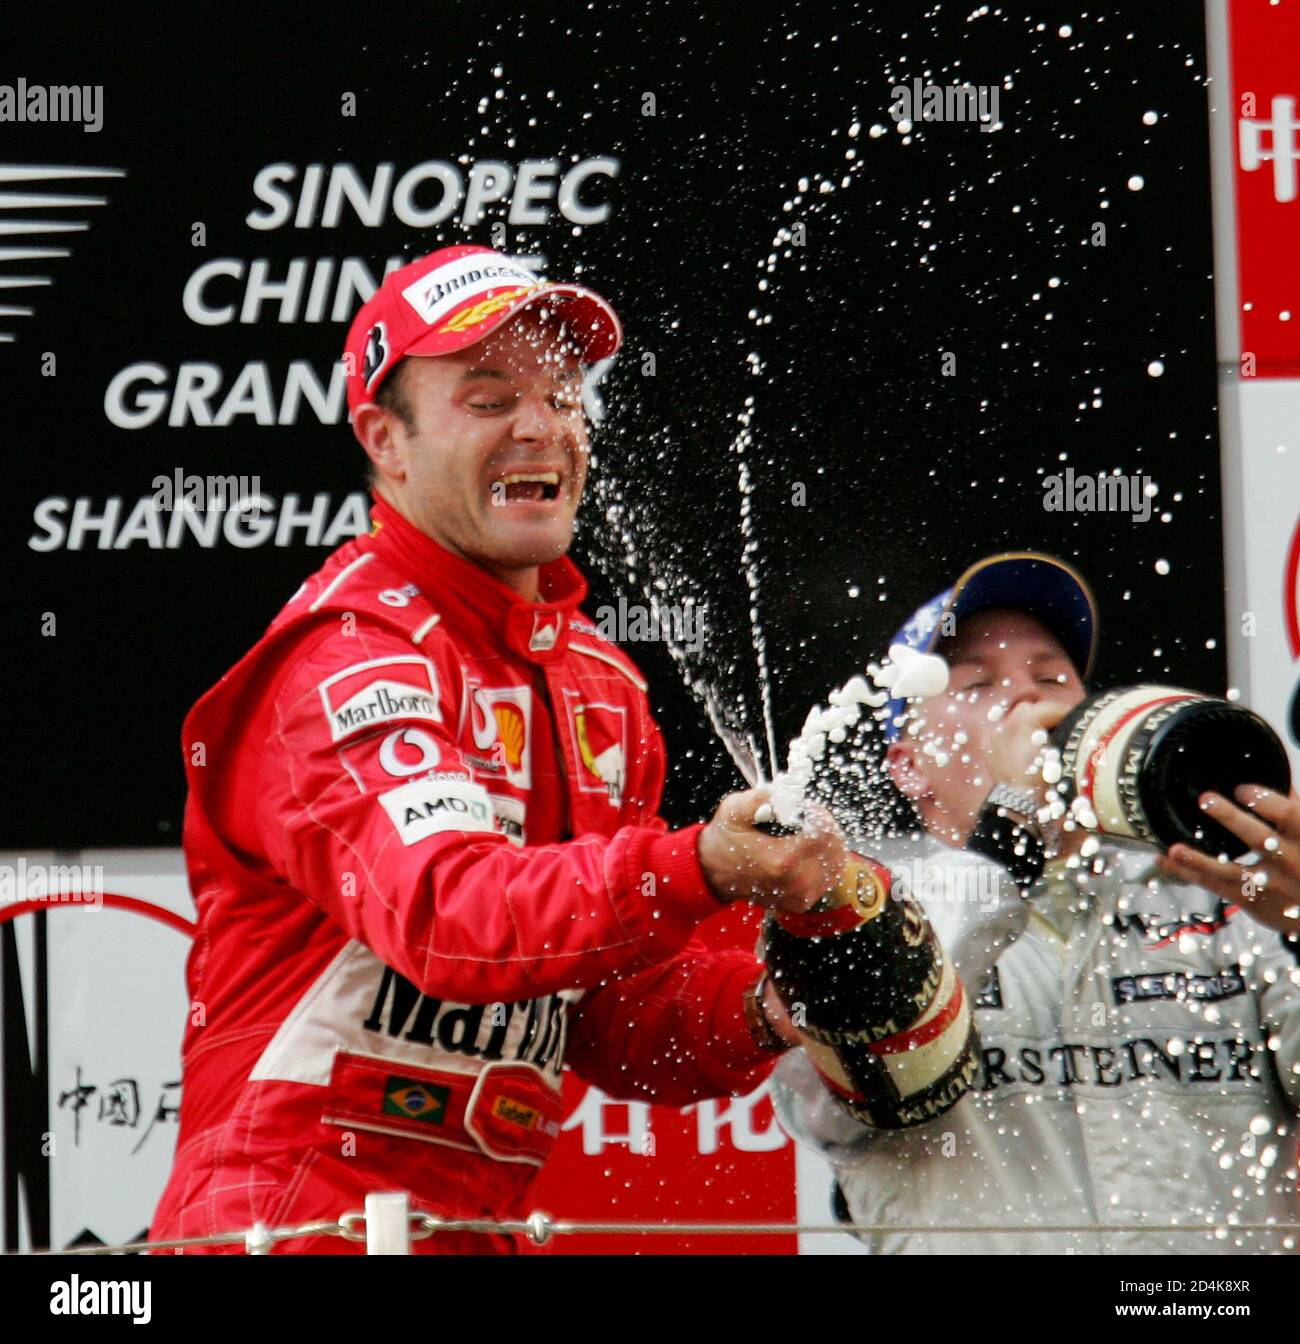 Brazilian Rubens Barrichello of Ferrari (L) and Finland's Kimi Raikkonen of  McLaren sprays champagne on the podium during the Chinese Grand Prix at  Shanghai Circuit September 26, 2004. Brazilian Rubens Barrichello won